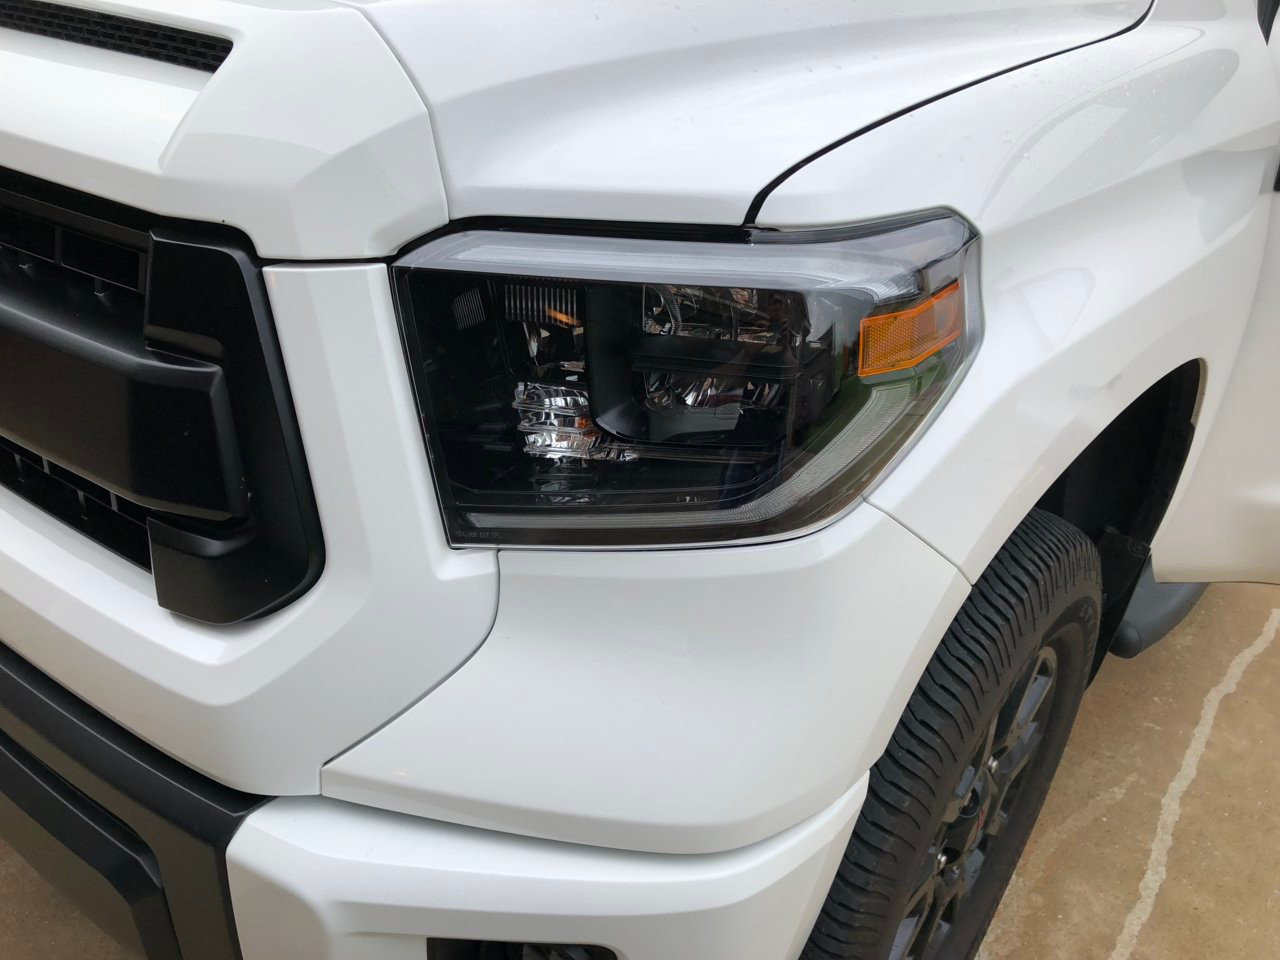 TRD Headlight- Toyota Tundra OEM TRD Pro Driver Side Headlight (2018-2021) 81150-0C211

